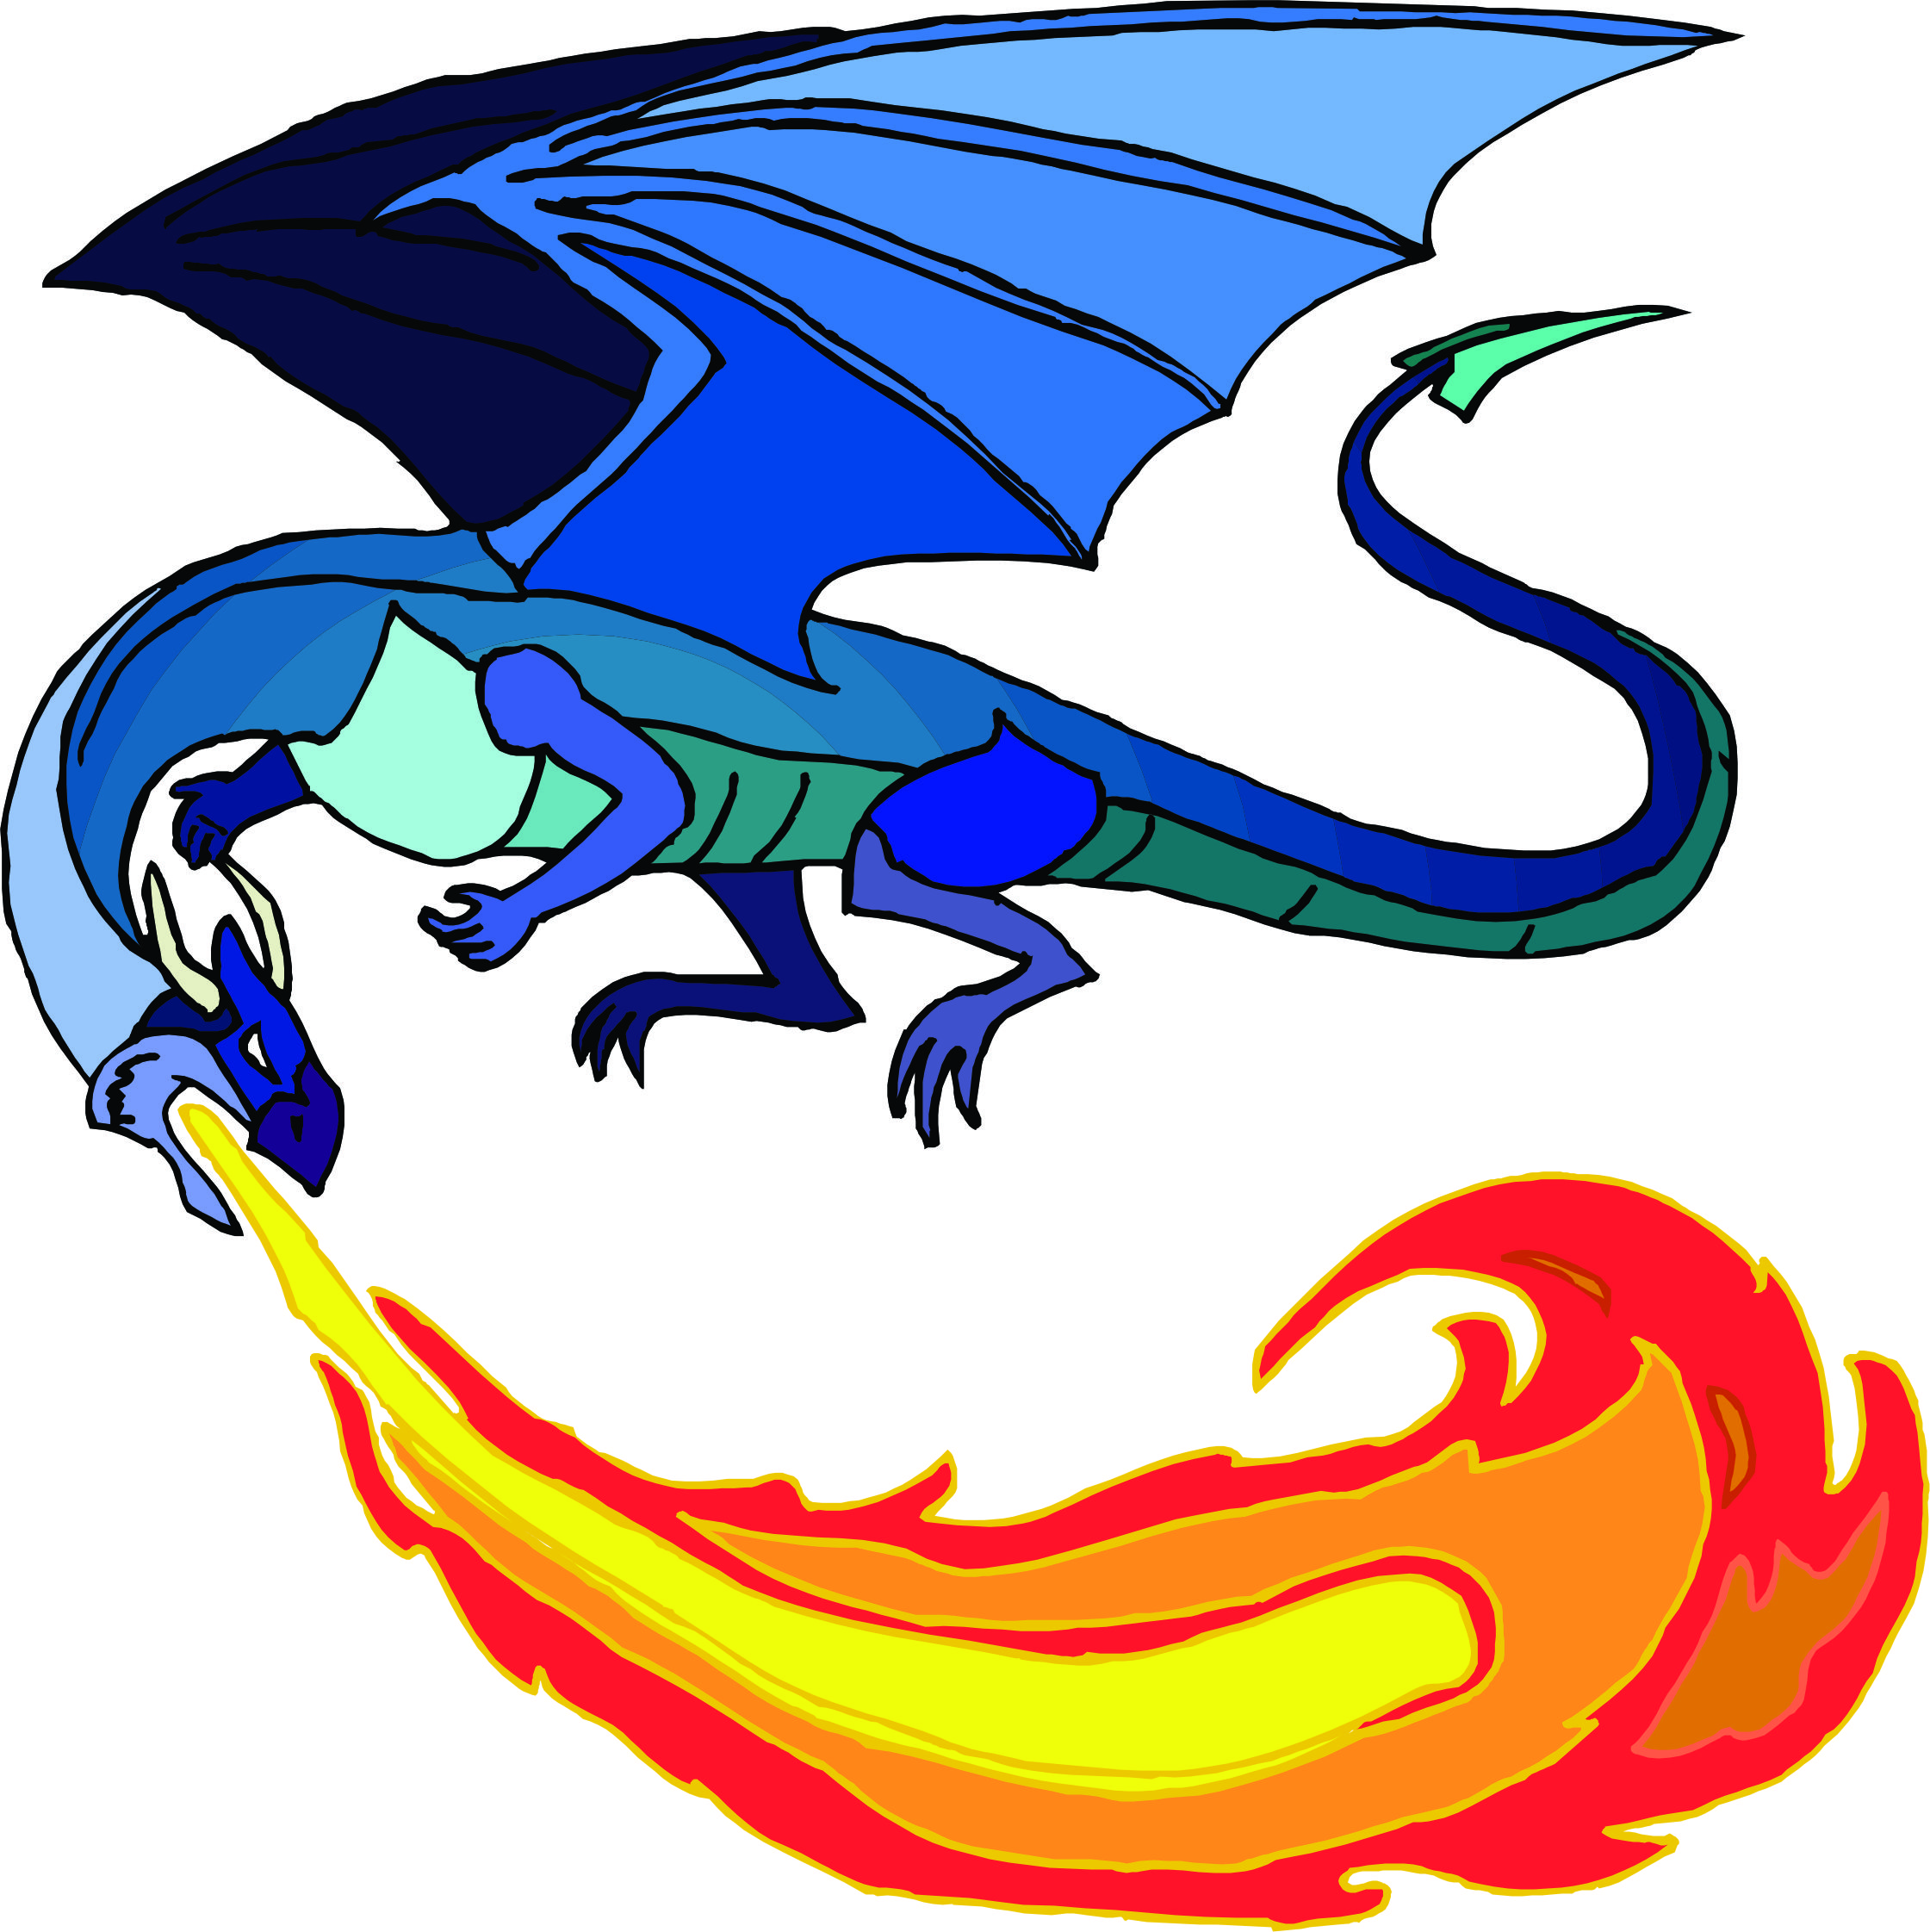 Dragon cartoon images 4